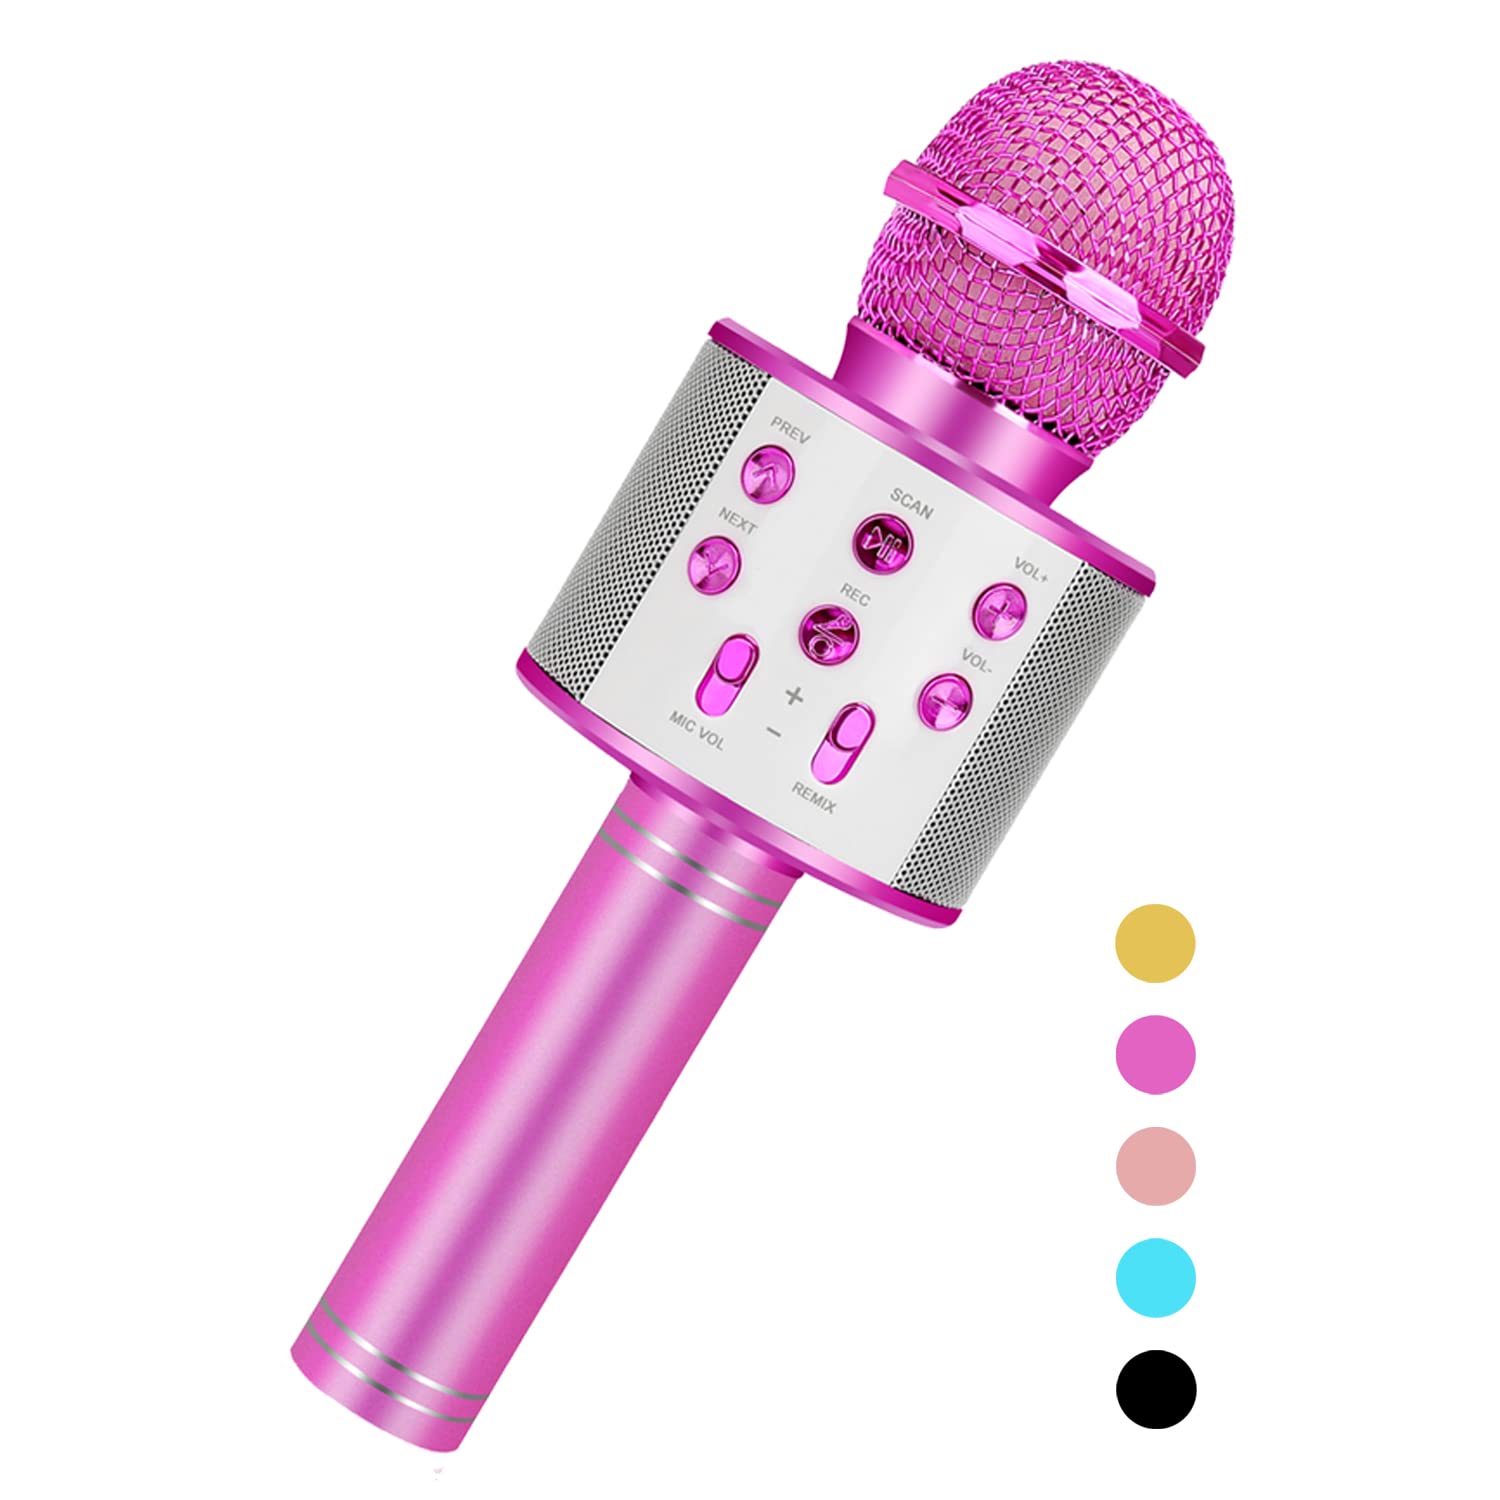 Niskite Kids Karaoke Microphone